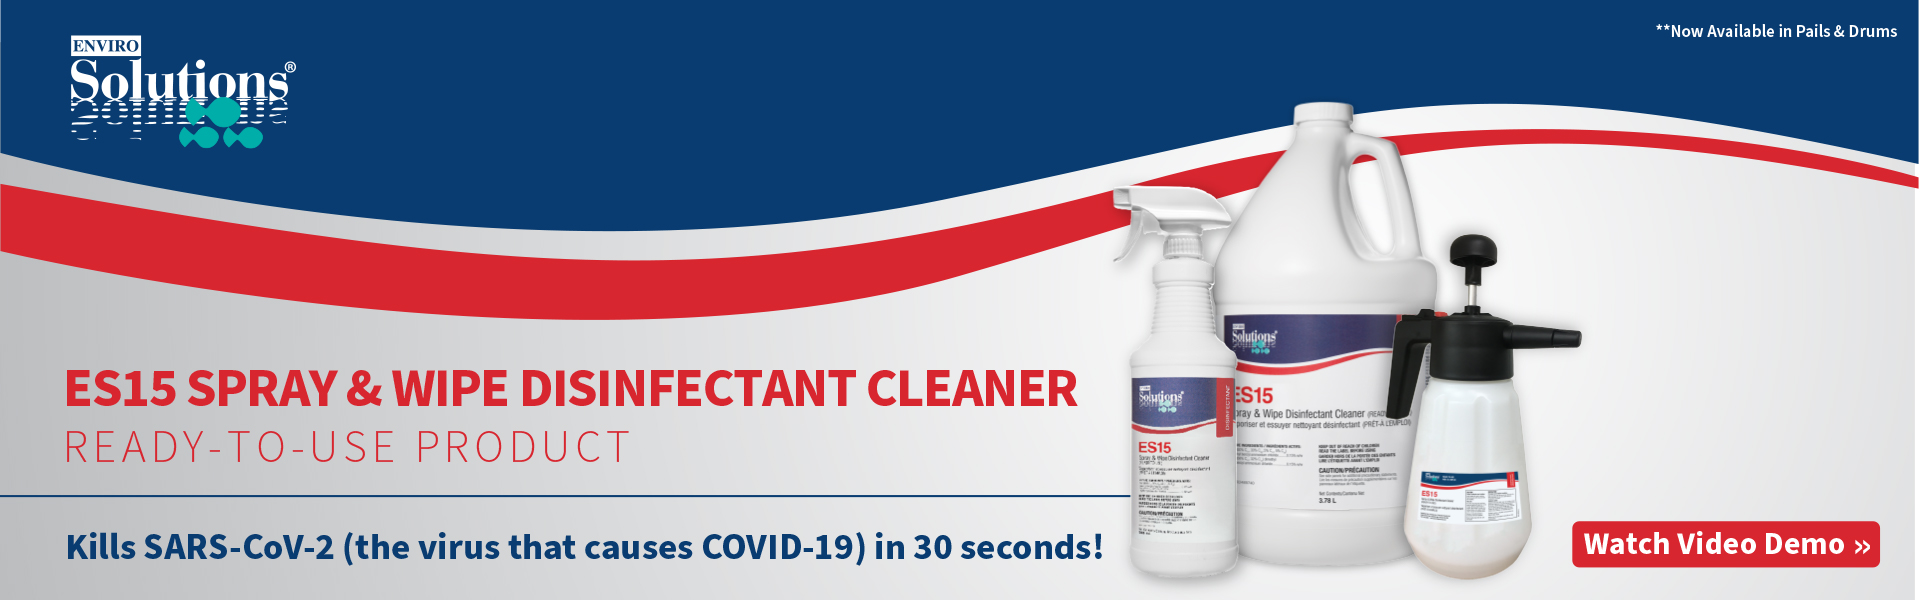 Enviro Solutions ES15 Disinfectant Cleaner